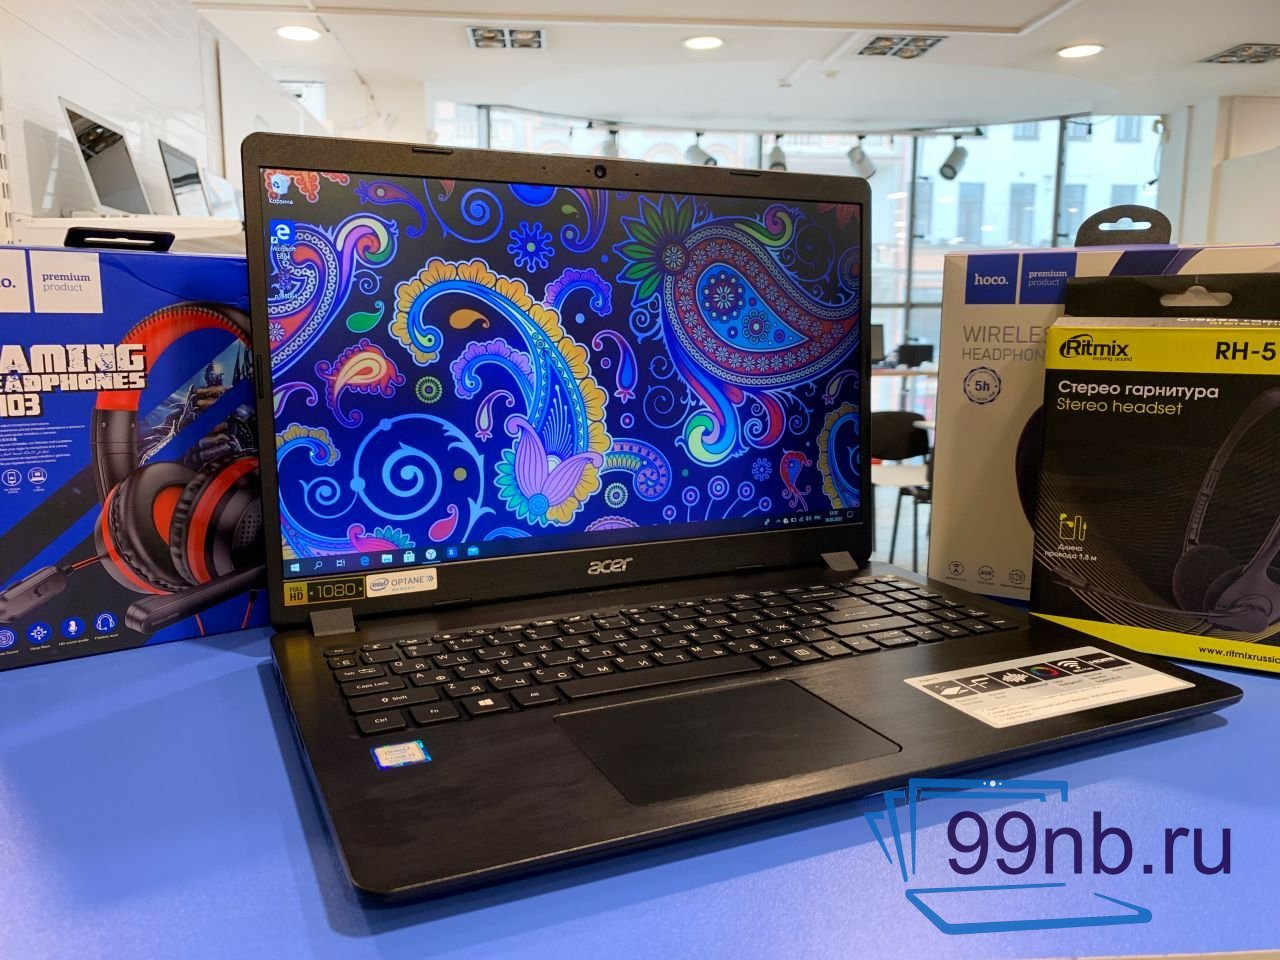  Ноутбук Acer для учебы на Intel с Full HD